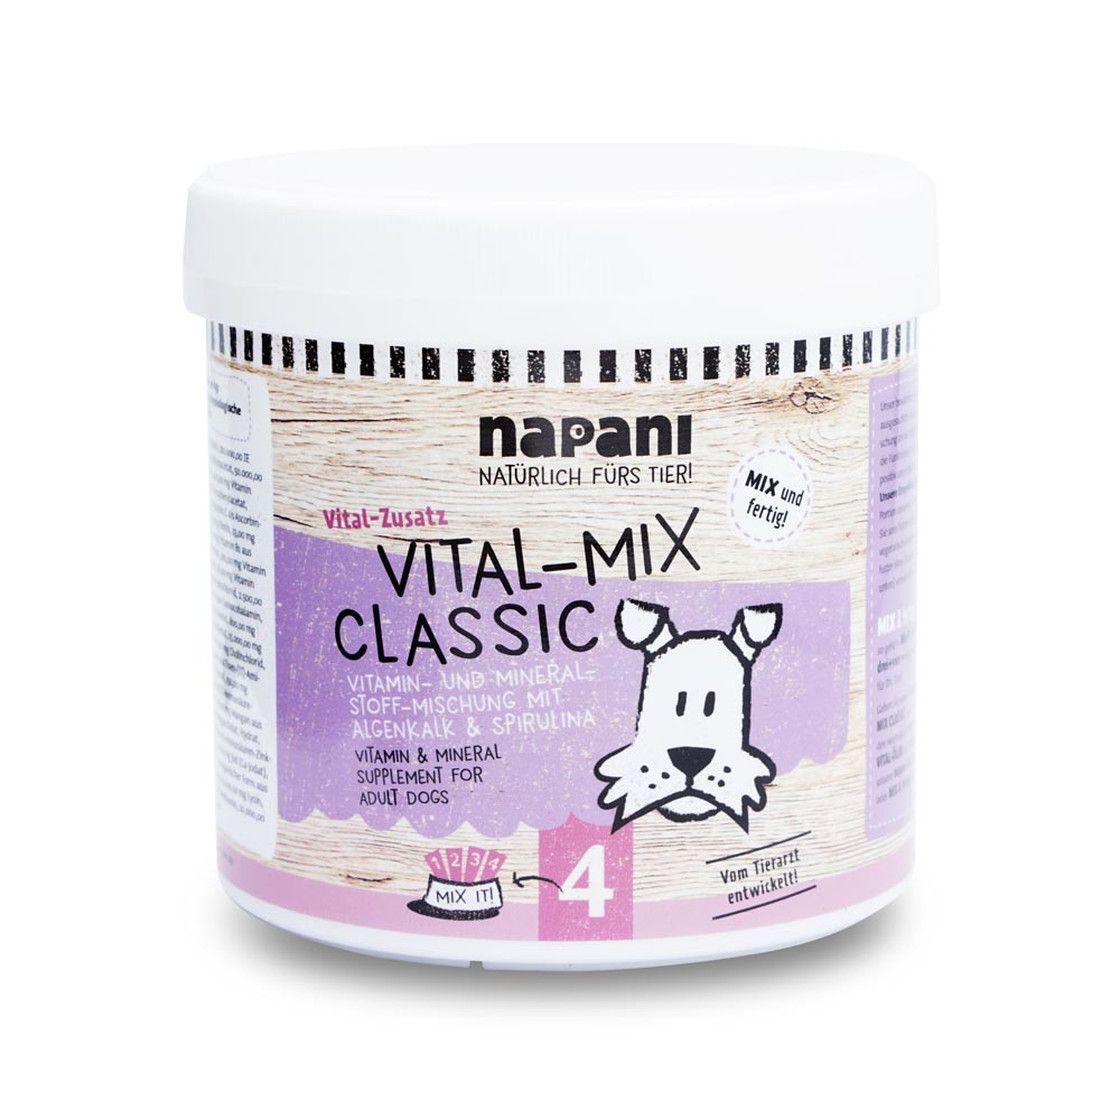 Vitalmix classic, Vitamin -u. Mineralstoffmischung für Hunde